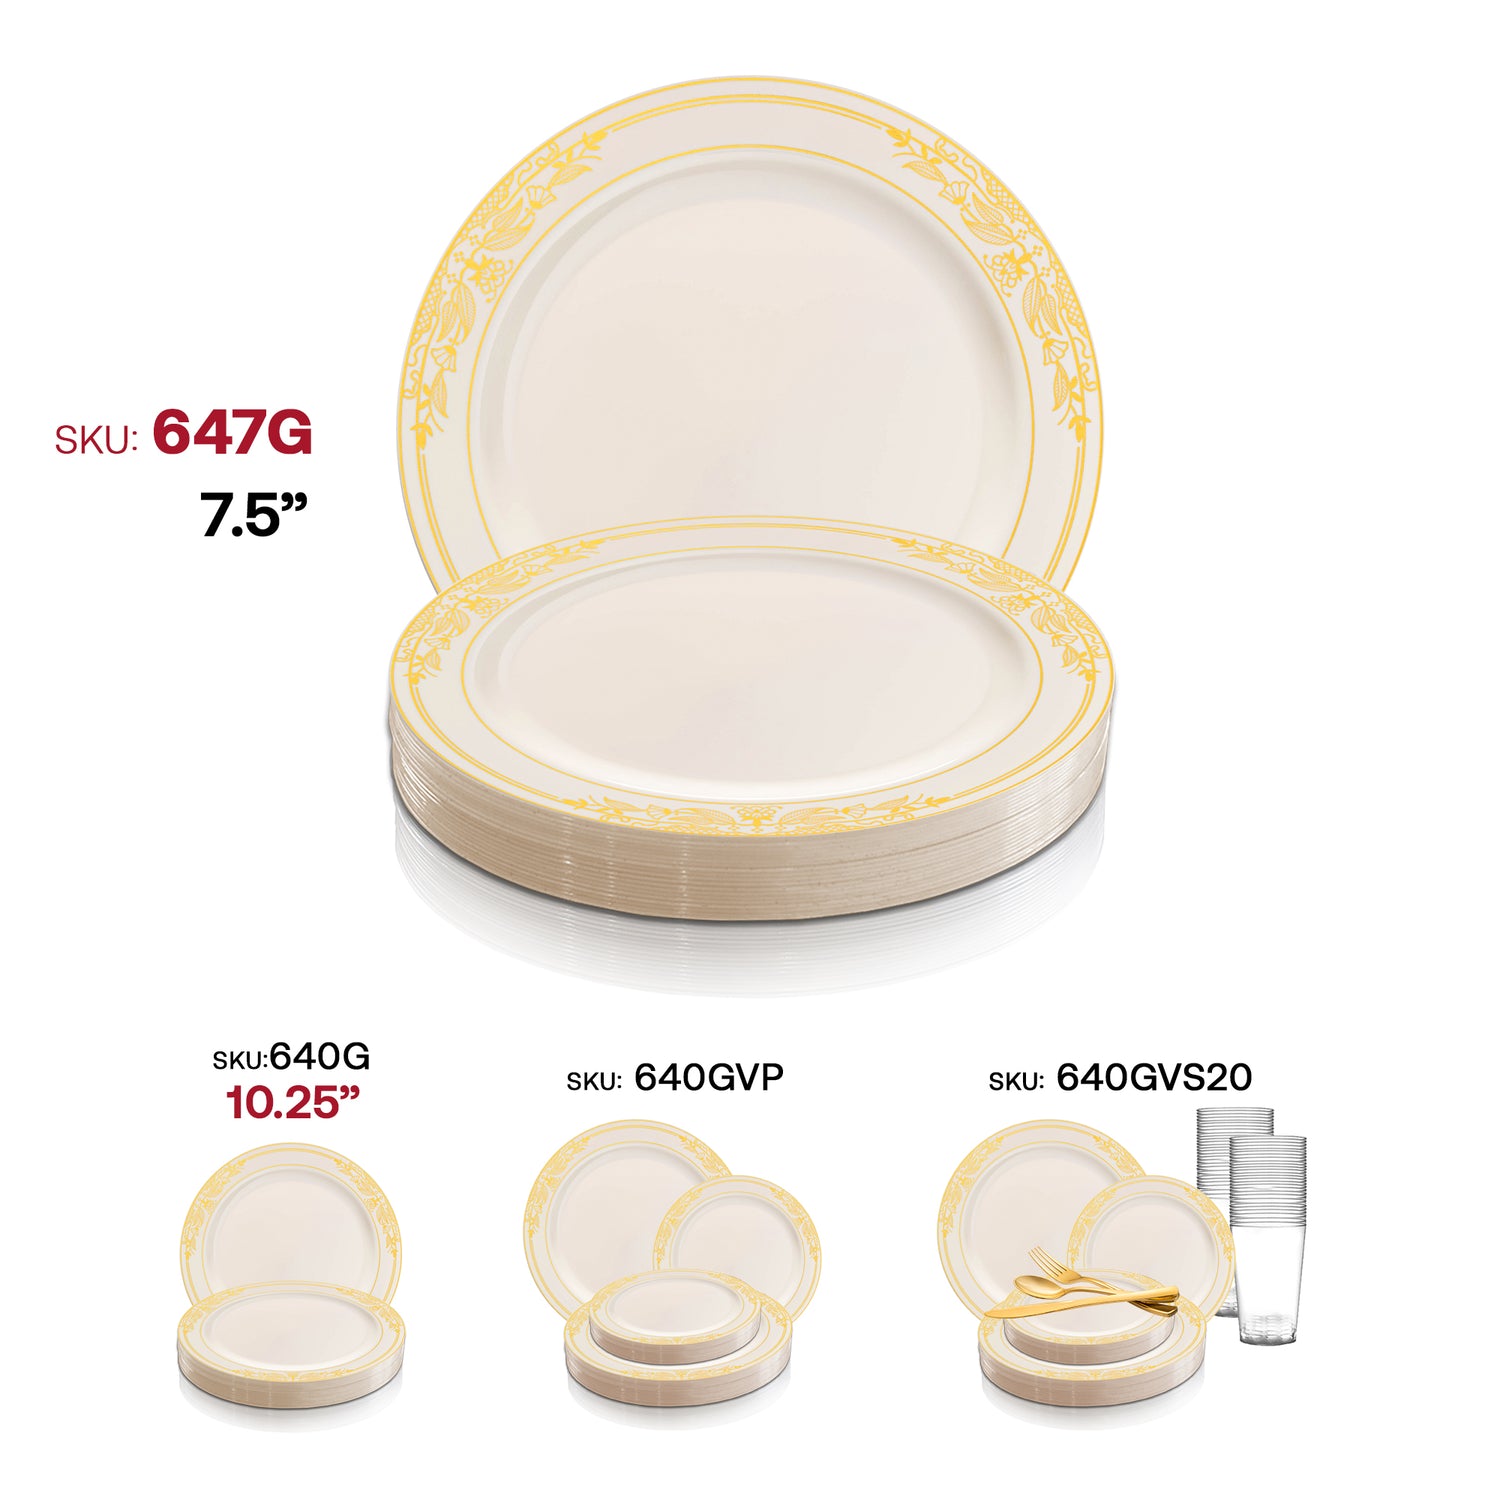 Ivory with Gold Harmony Rim Plastic Salad Plates (7.5") SKU | The Kaya Collection